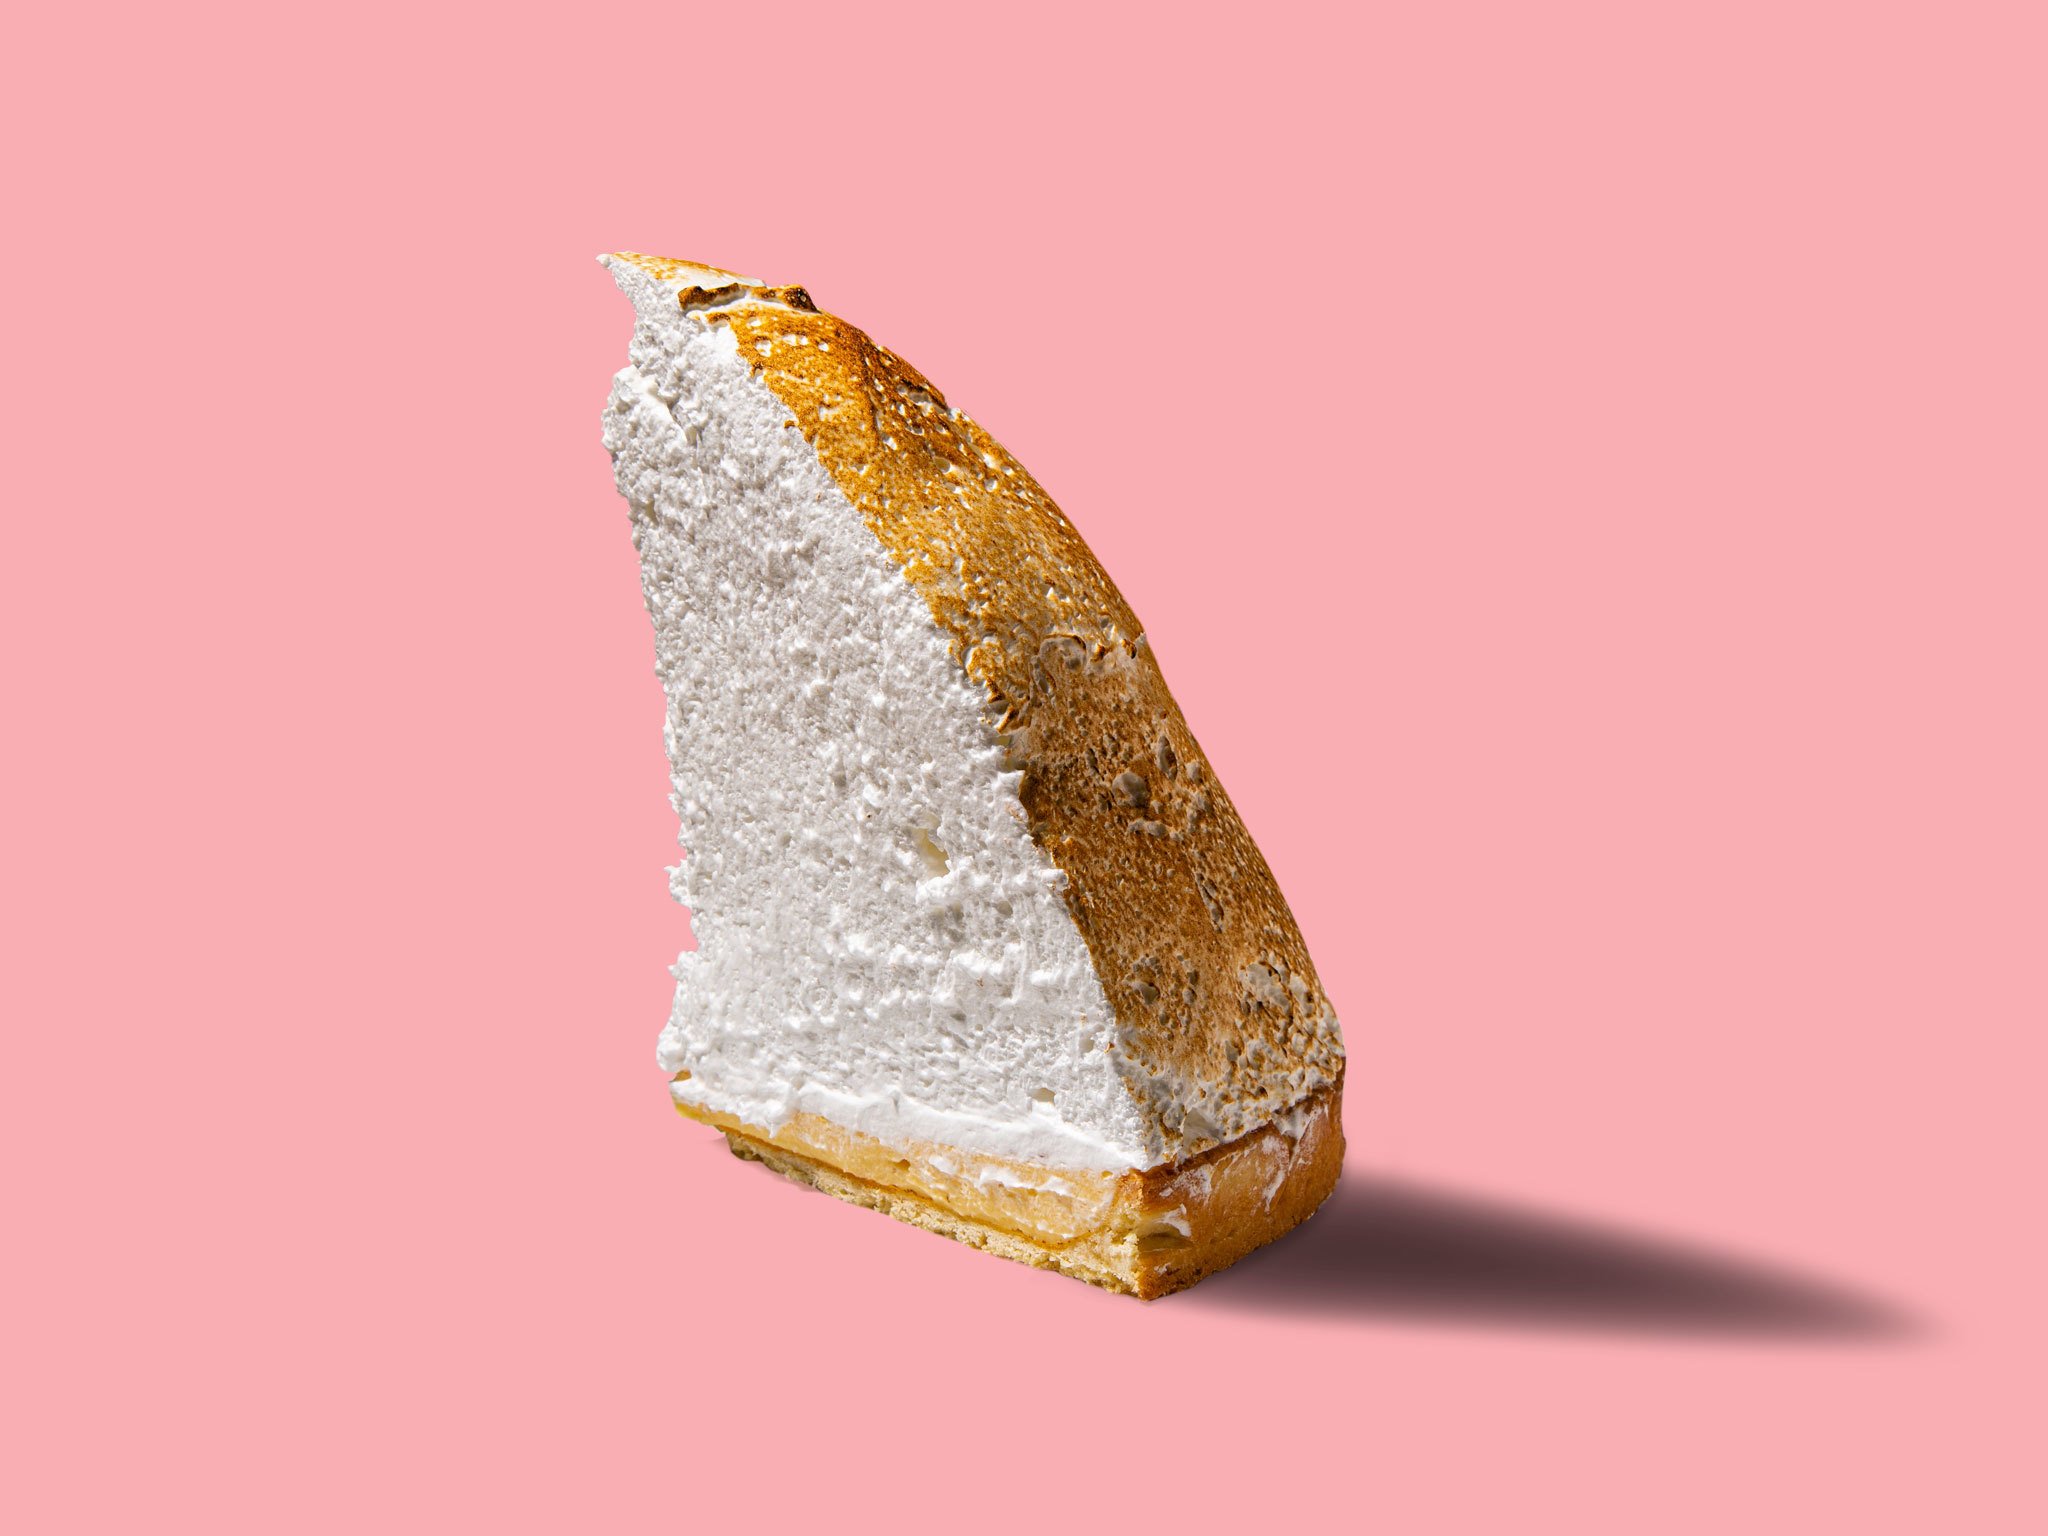 What's the secret behind Gloria's iconic lemon meringue pie?